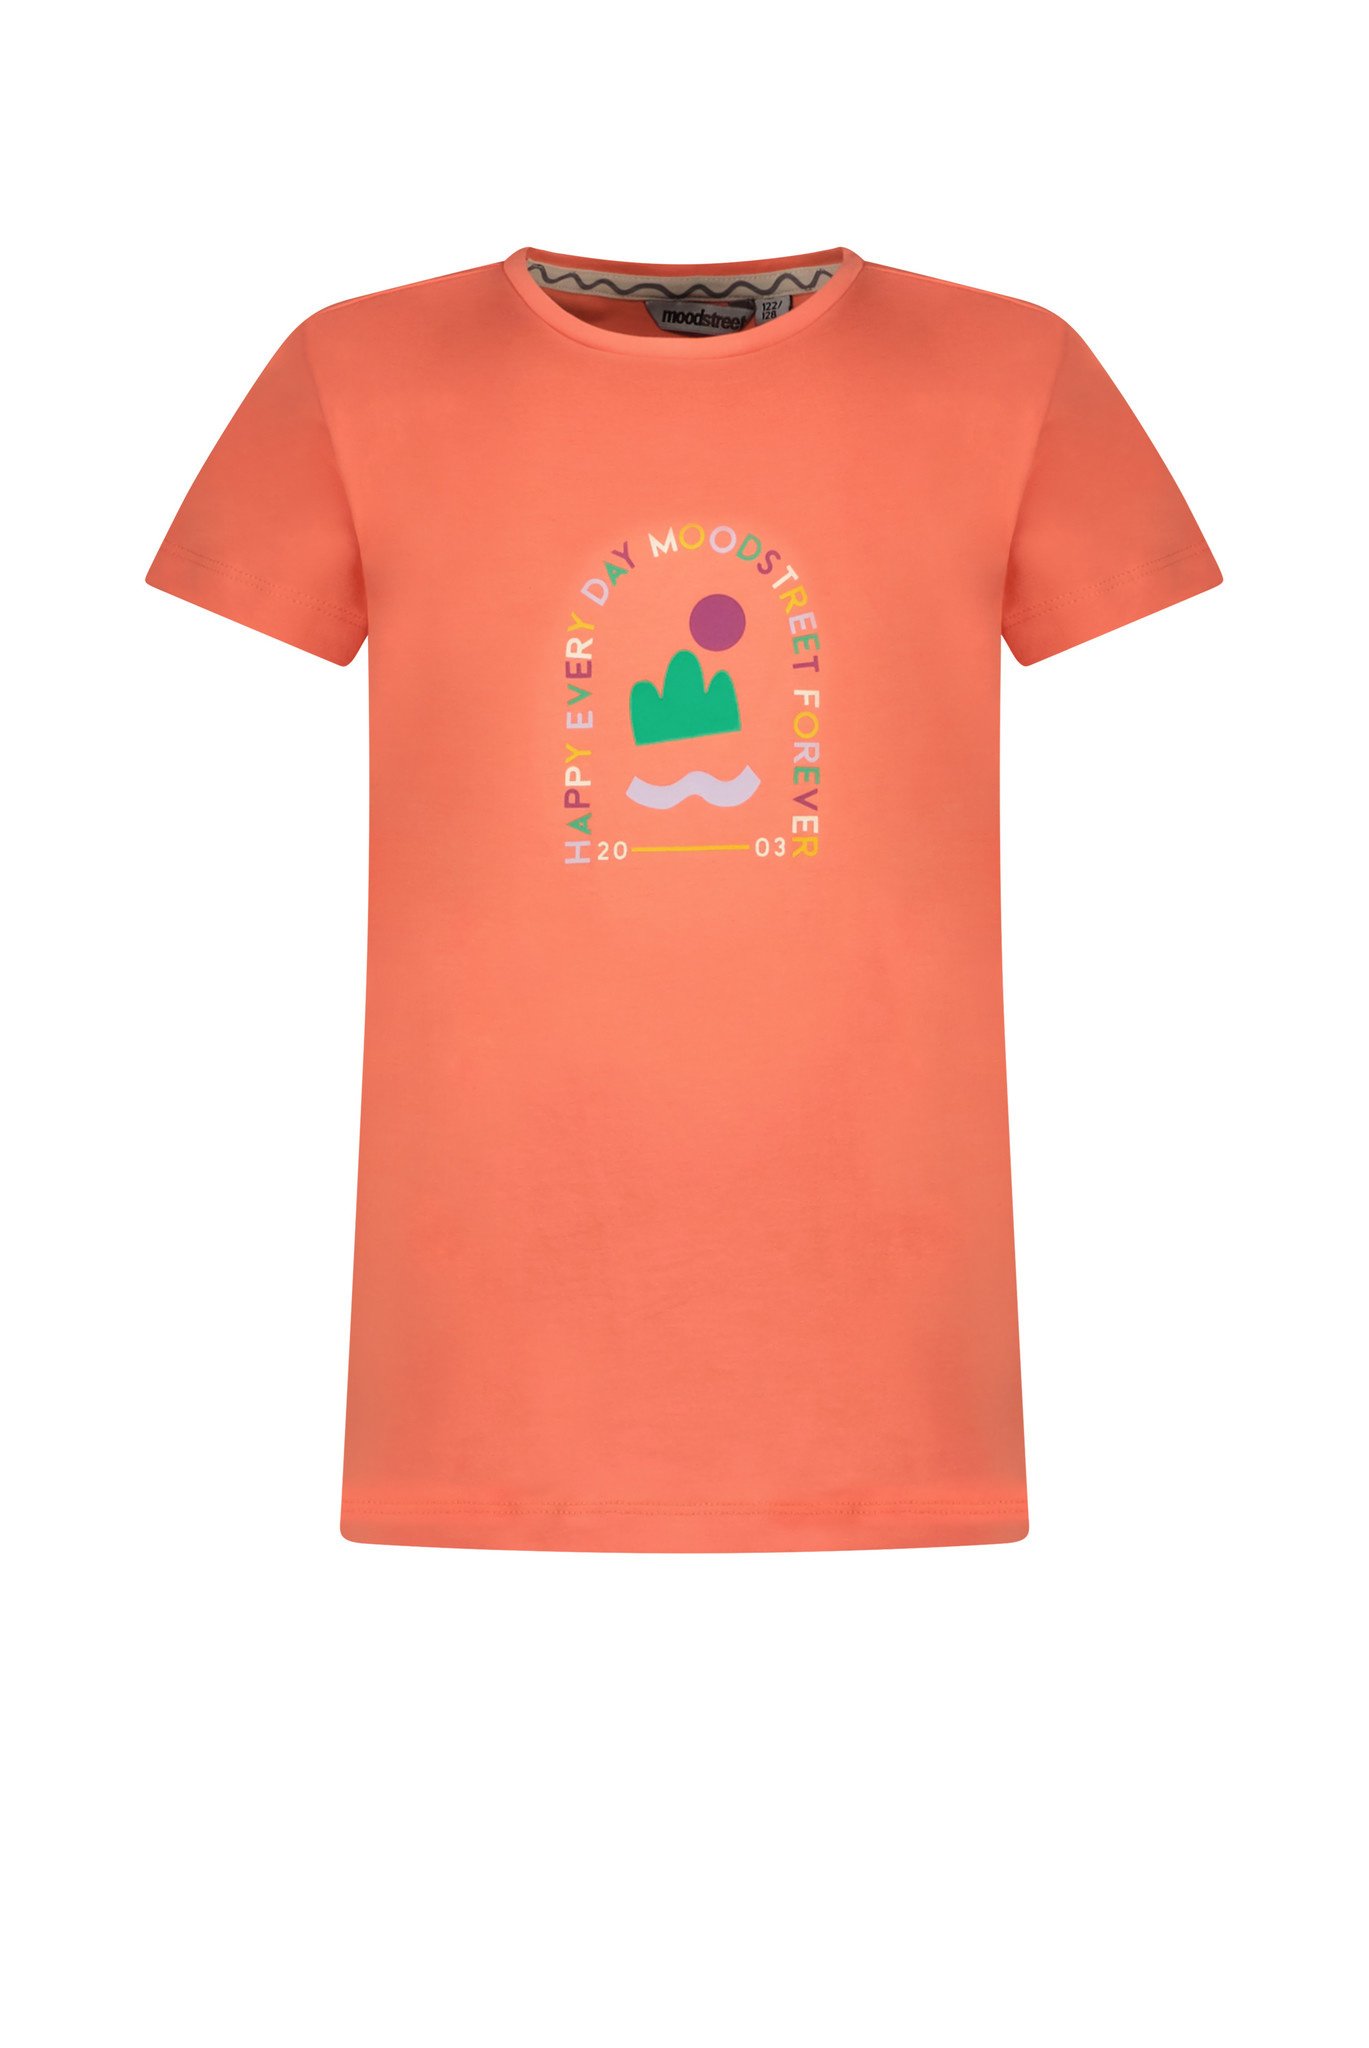 Moodstreet M302-5400 Meisjes T-shirt Coral - Maat 146/152